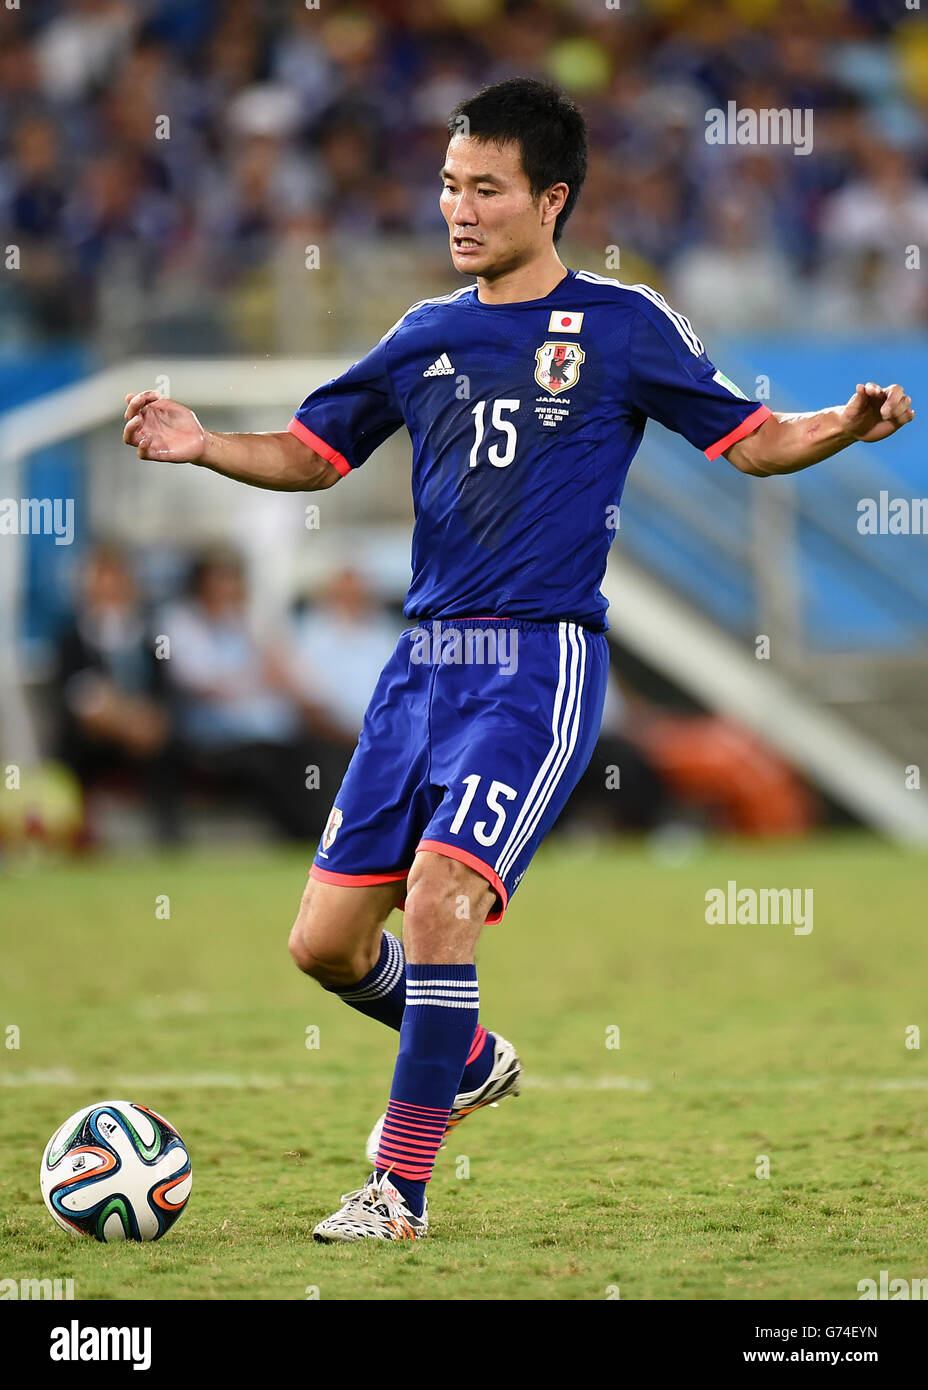 Soccer - FIFA World Cup 2014 - Group C - Japan v Colombia - Arena Pantanal. Japan's Yasuyuki Konno Stock Photo